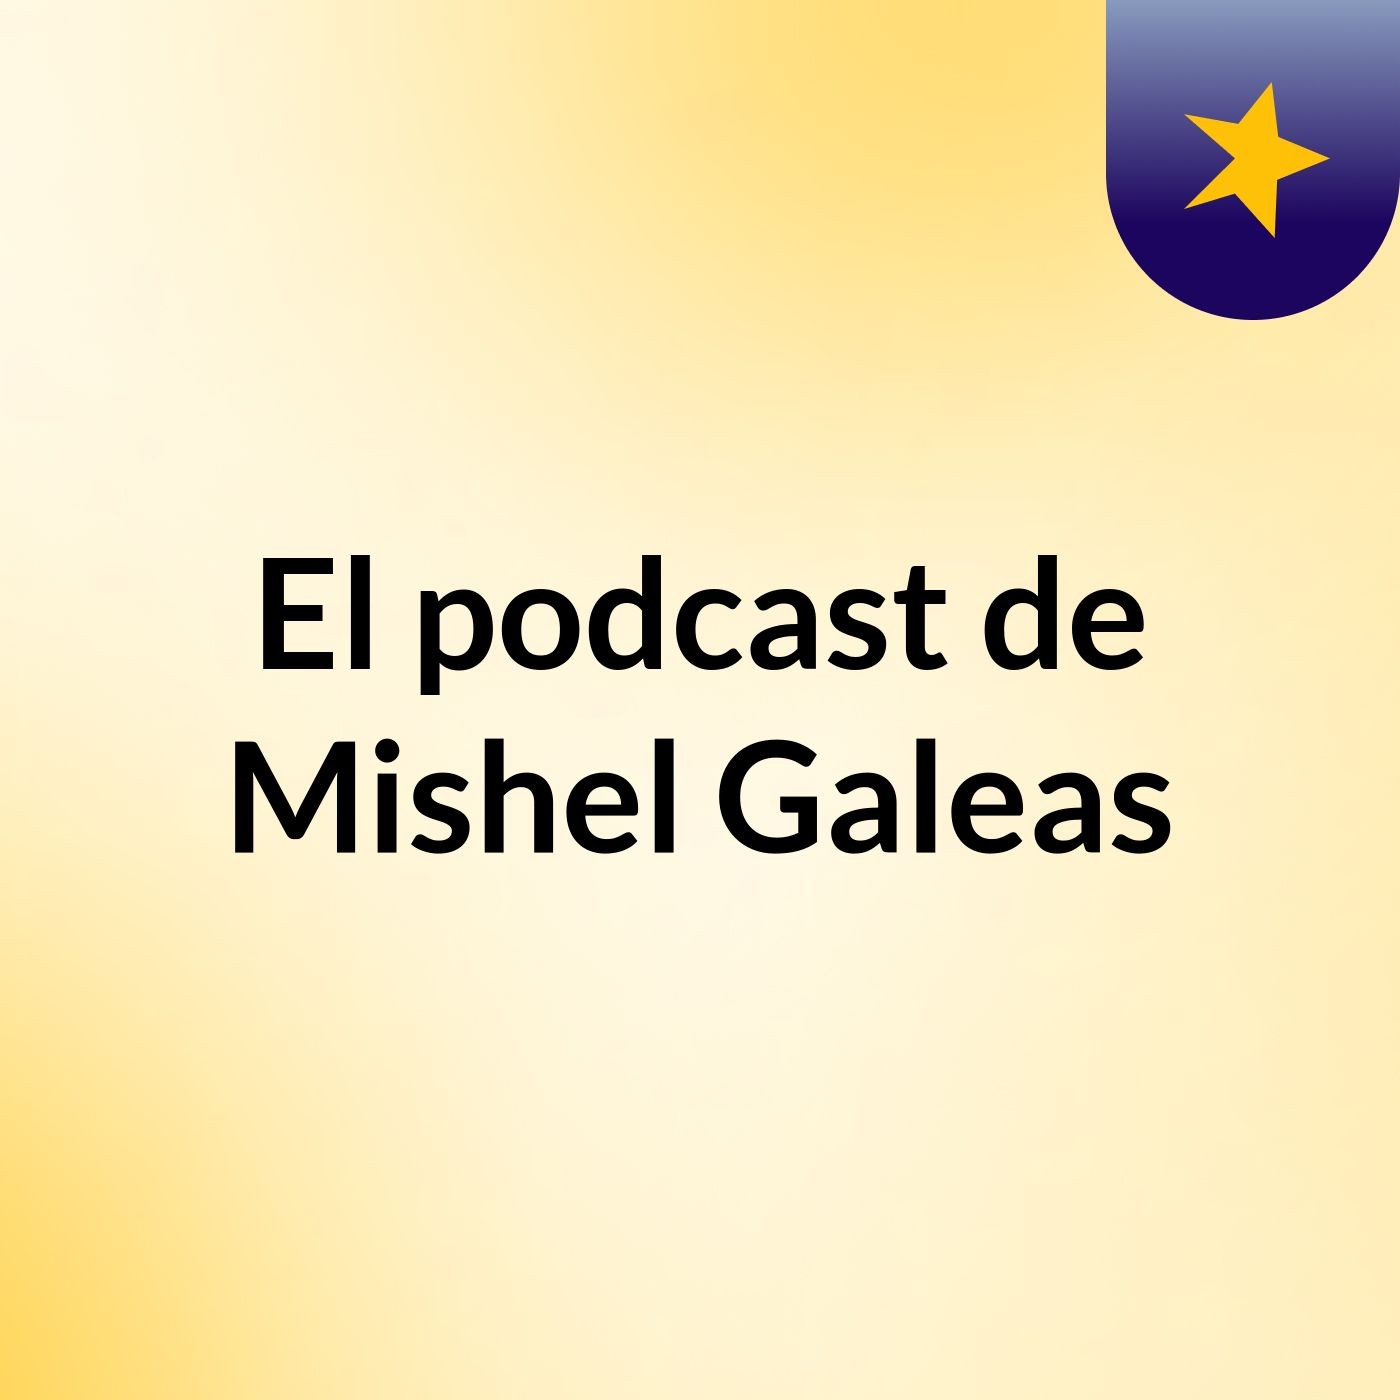 El podcast de Mishel Galeas